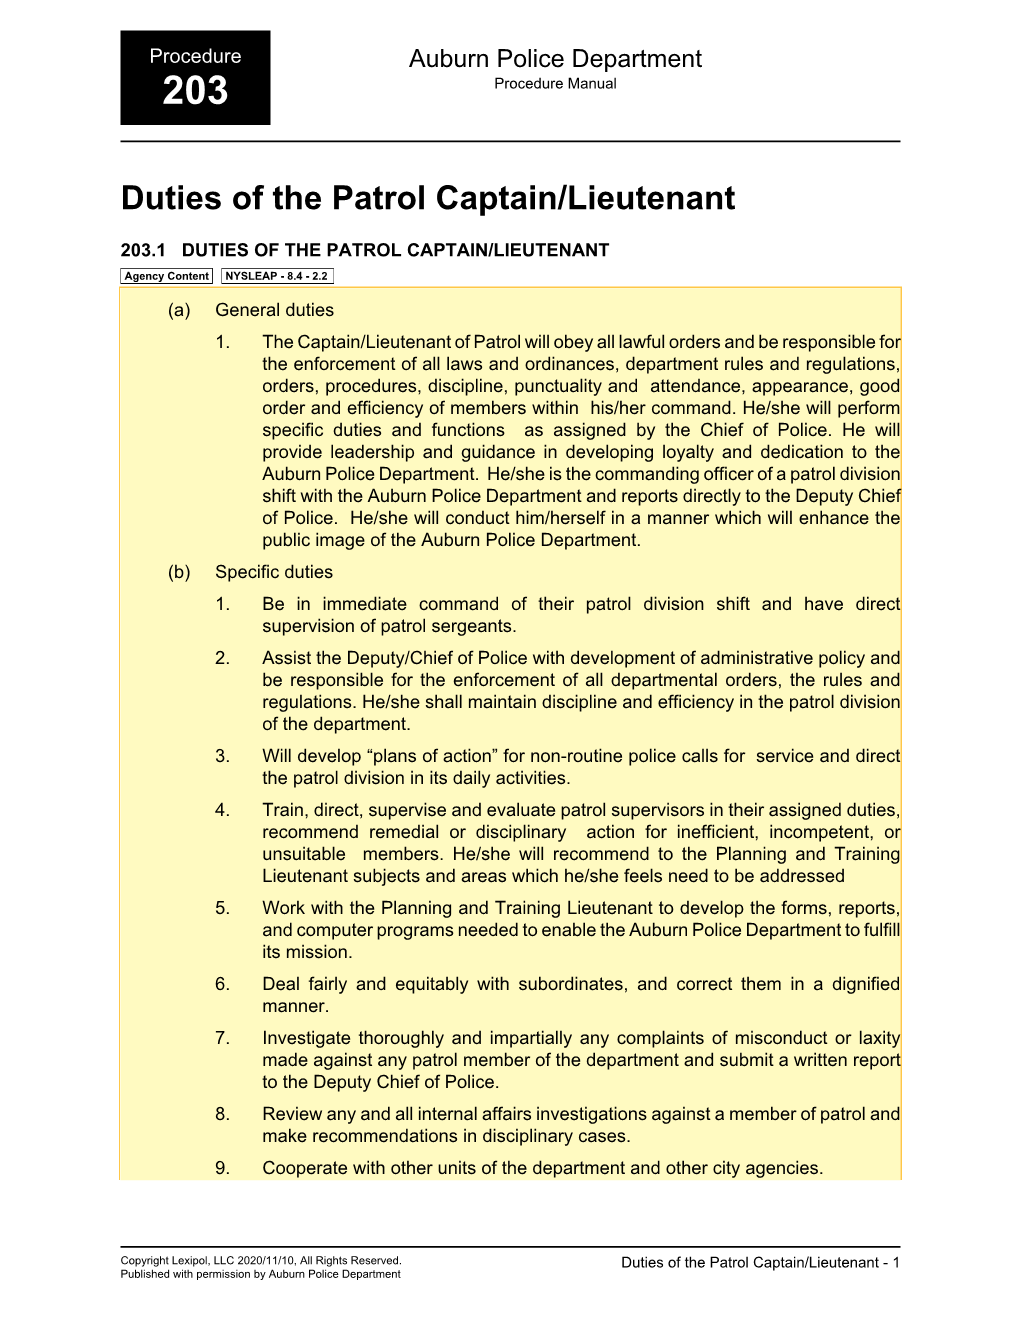 Duties of the Patrol Captain/Lieutenant